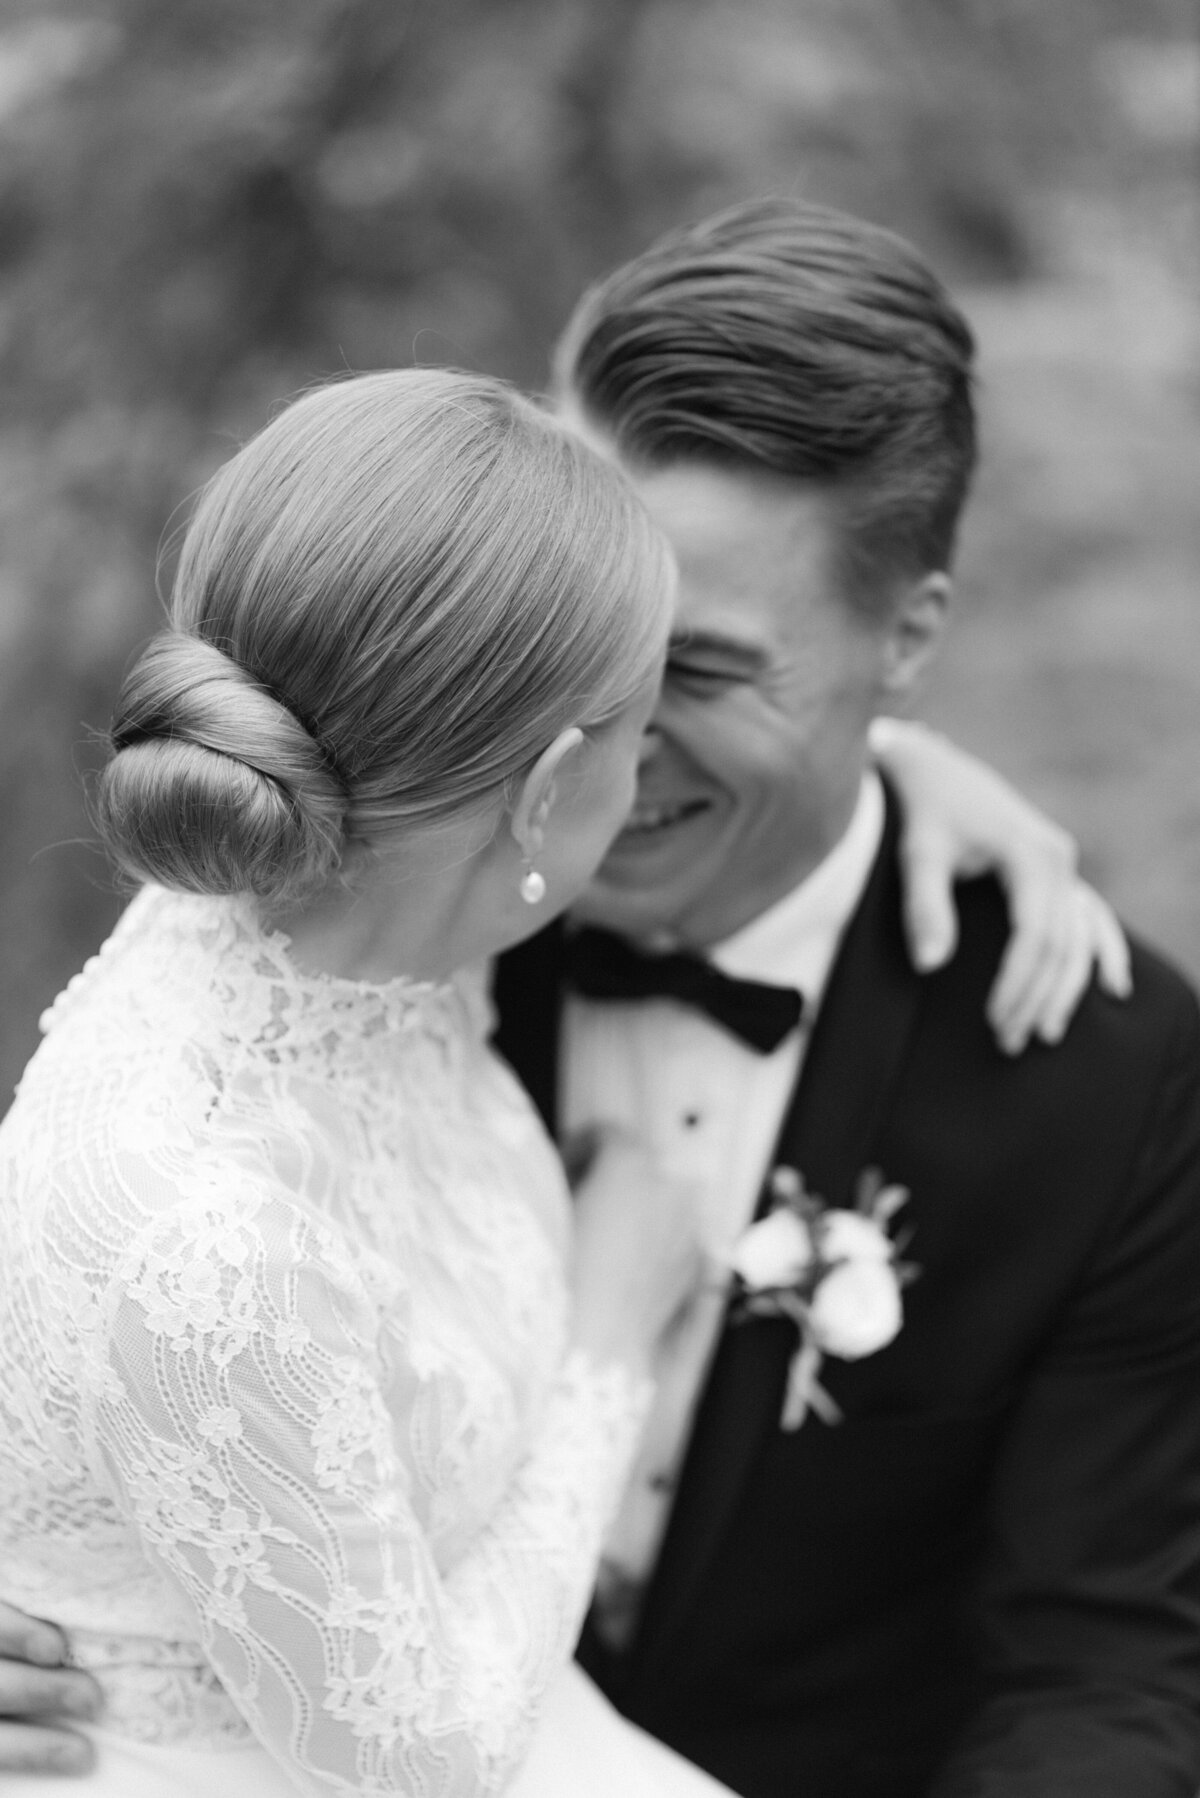 Wedding couple hugging during a wedding photo shoot with photographer Hannika Gabrielsson.